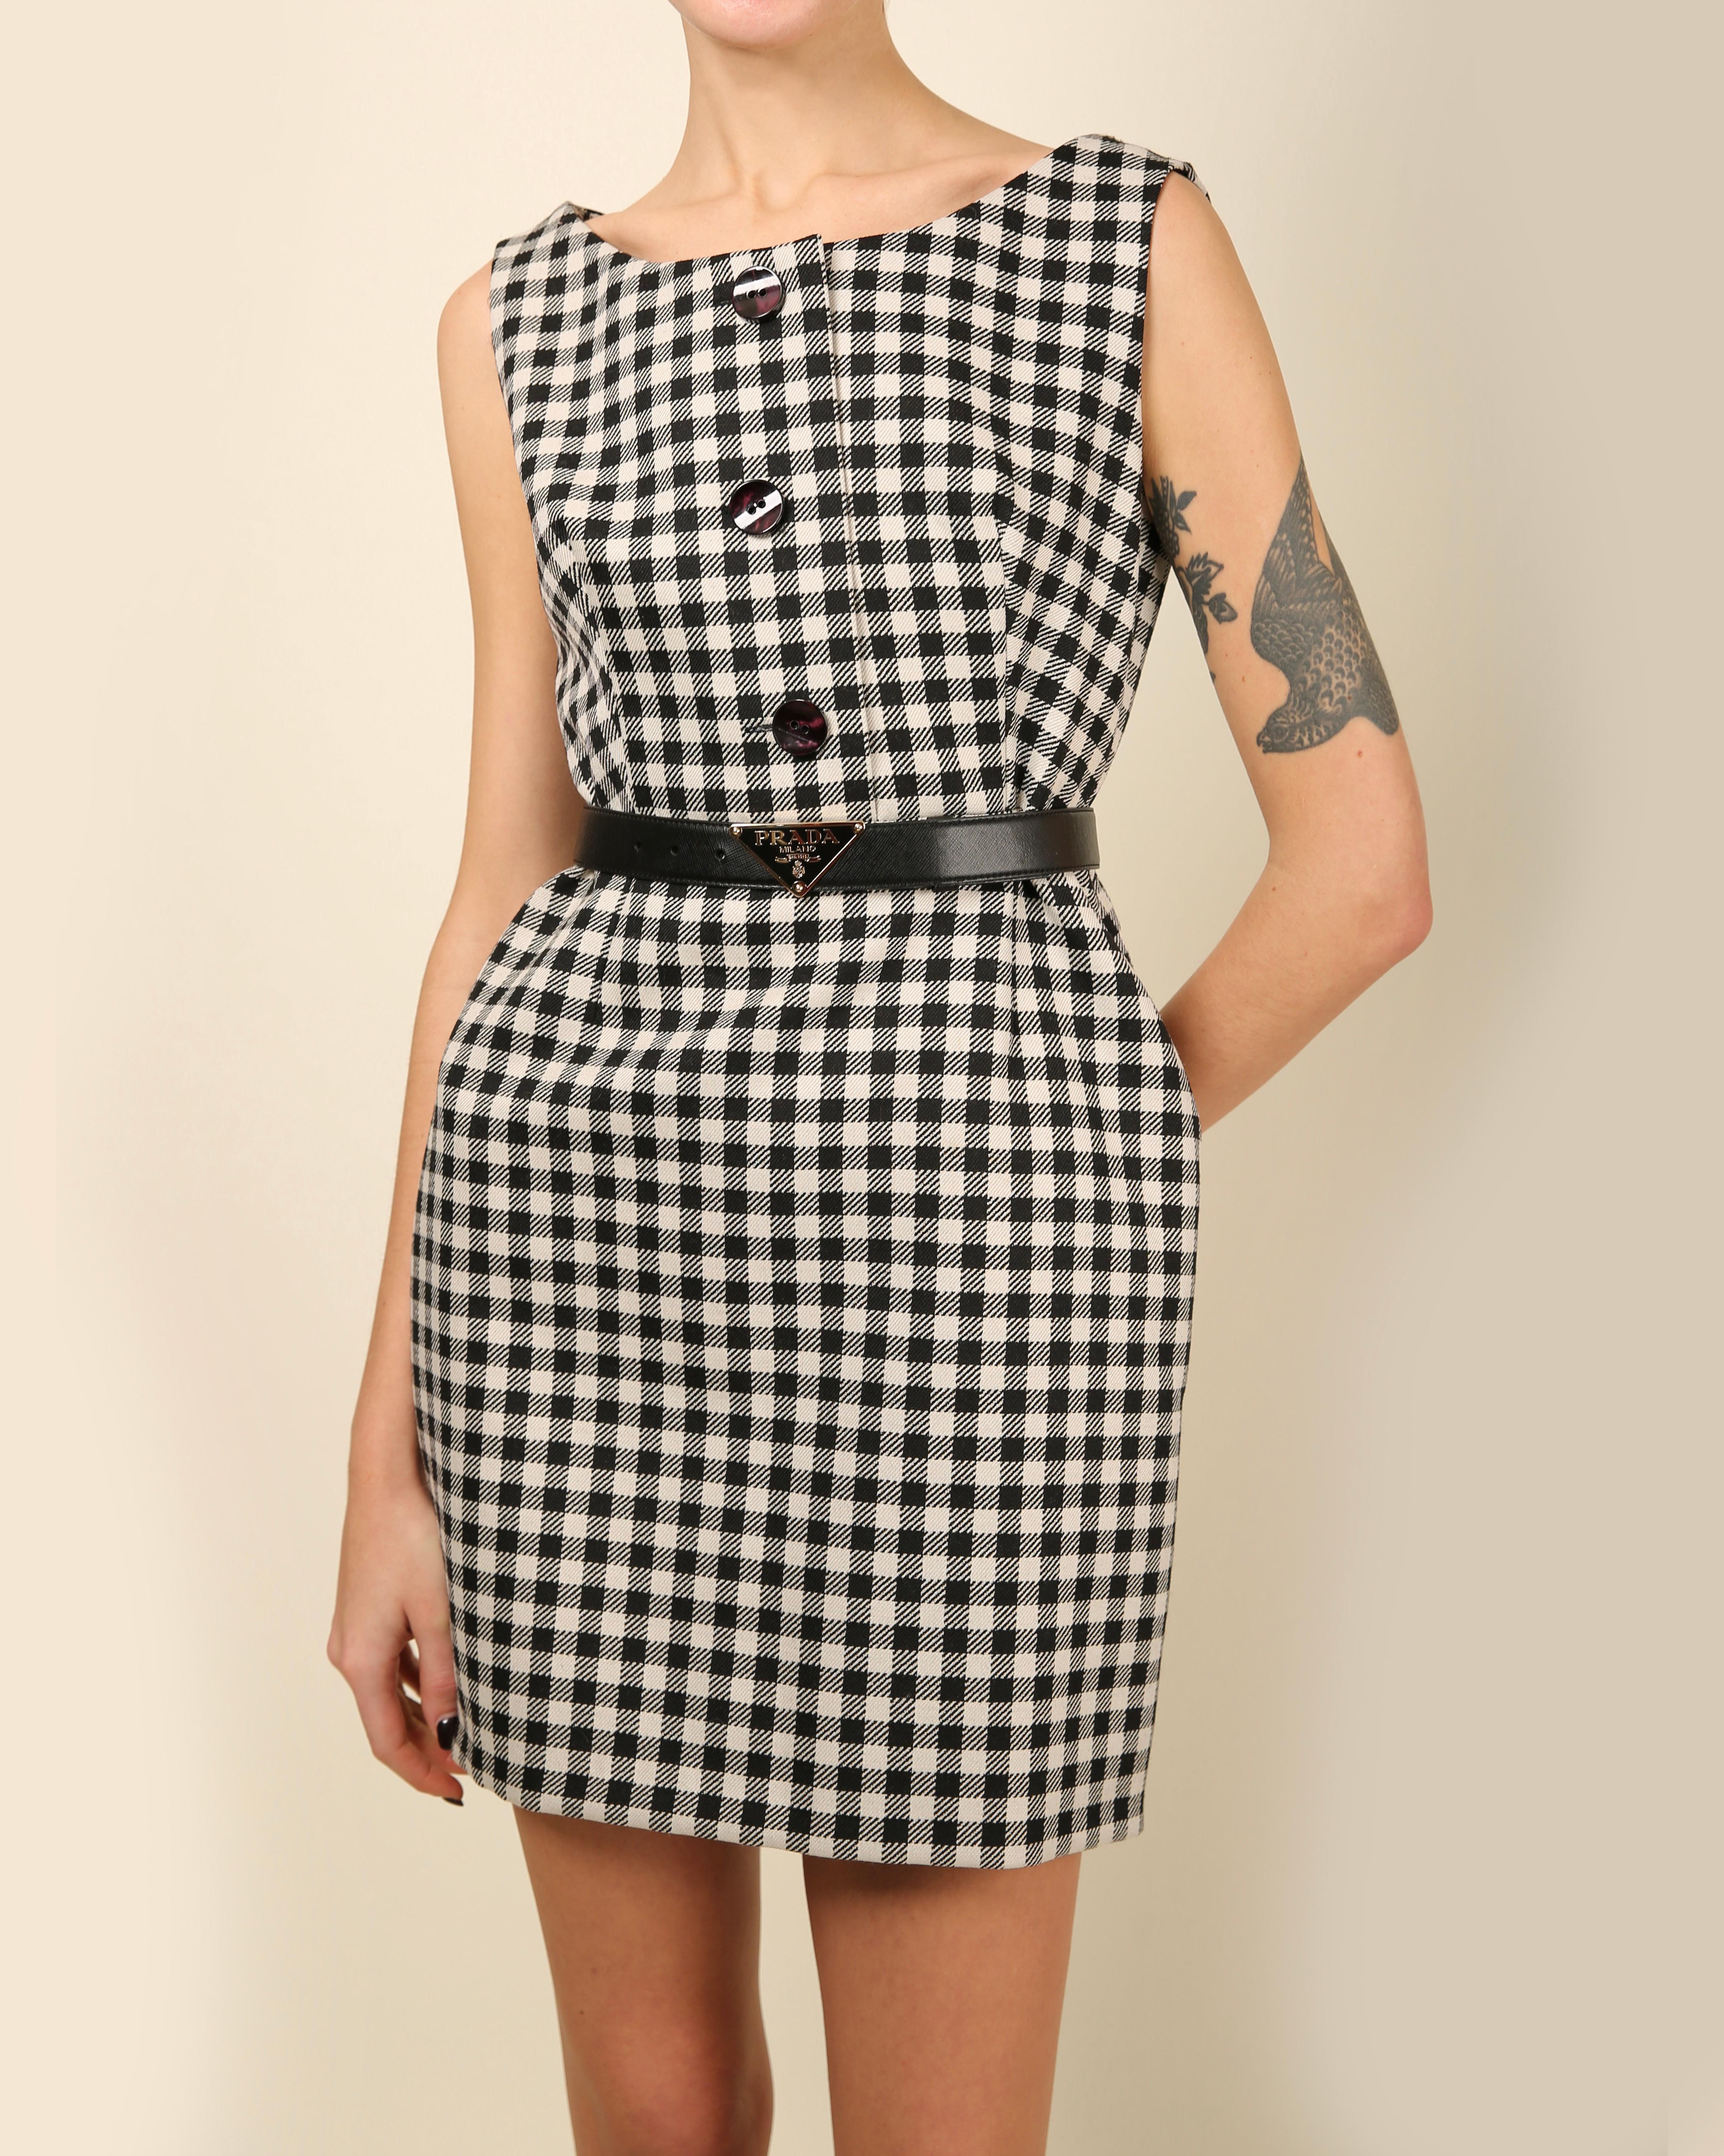 Prada black & white gingham check print sleeveless babydoll style mini dress For Sale 1